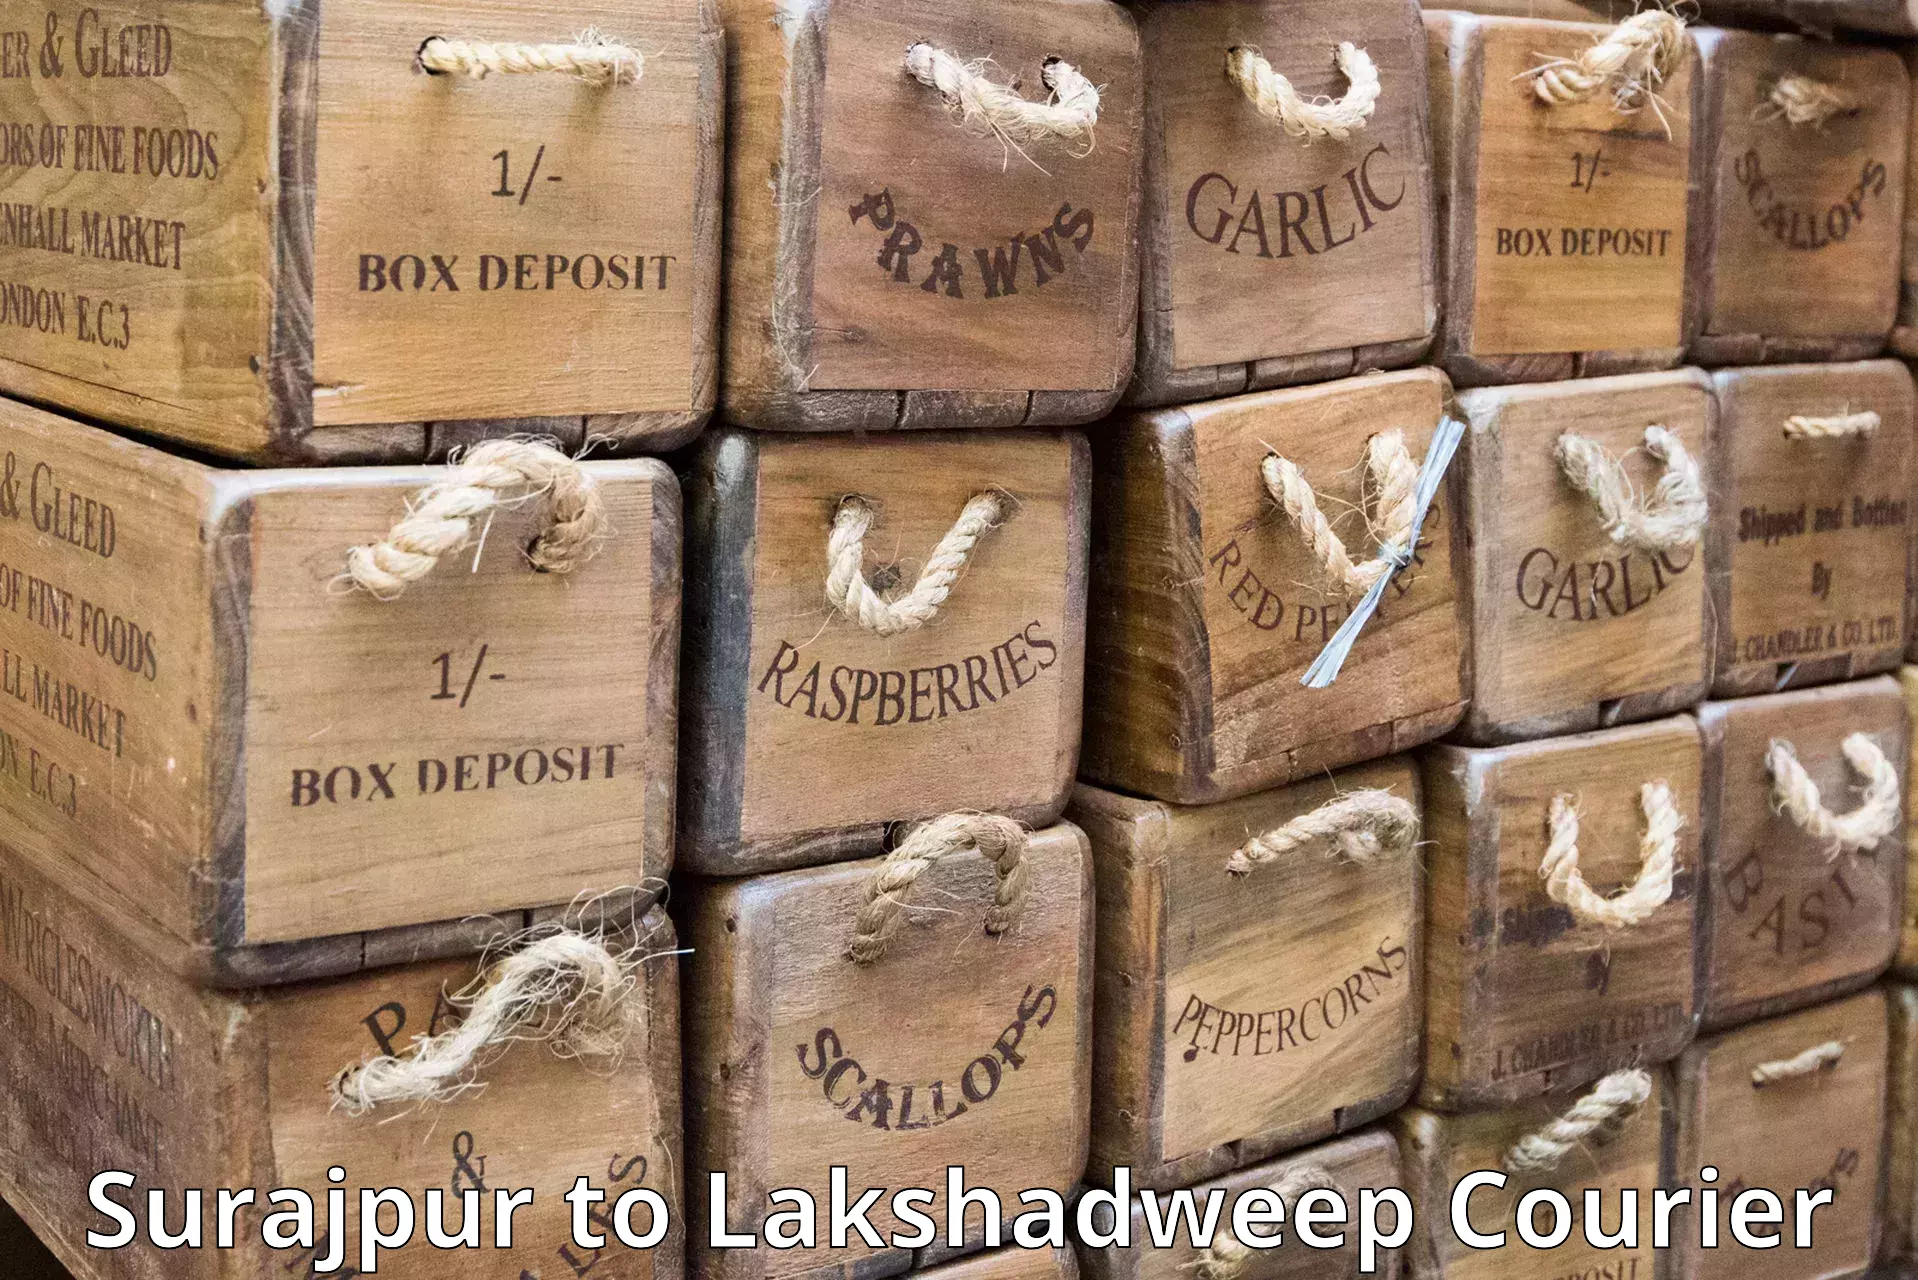 Global shipping networks Surajpur to Lakshadweep